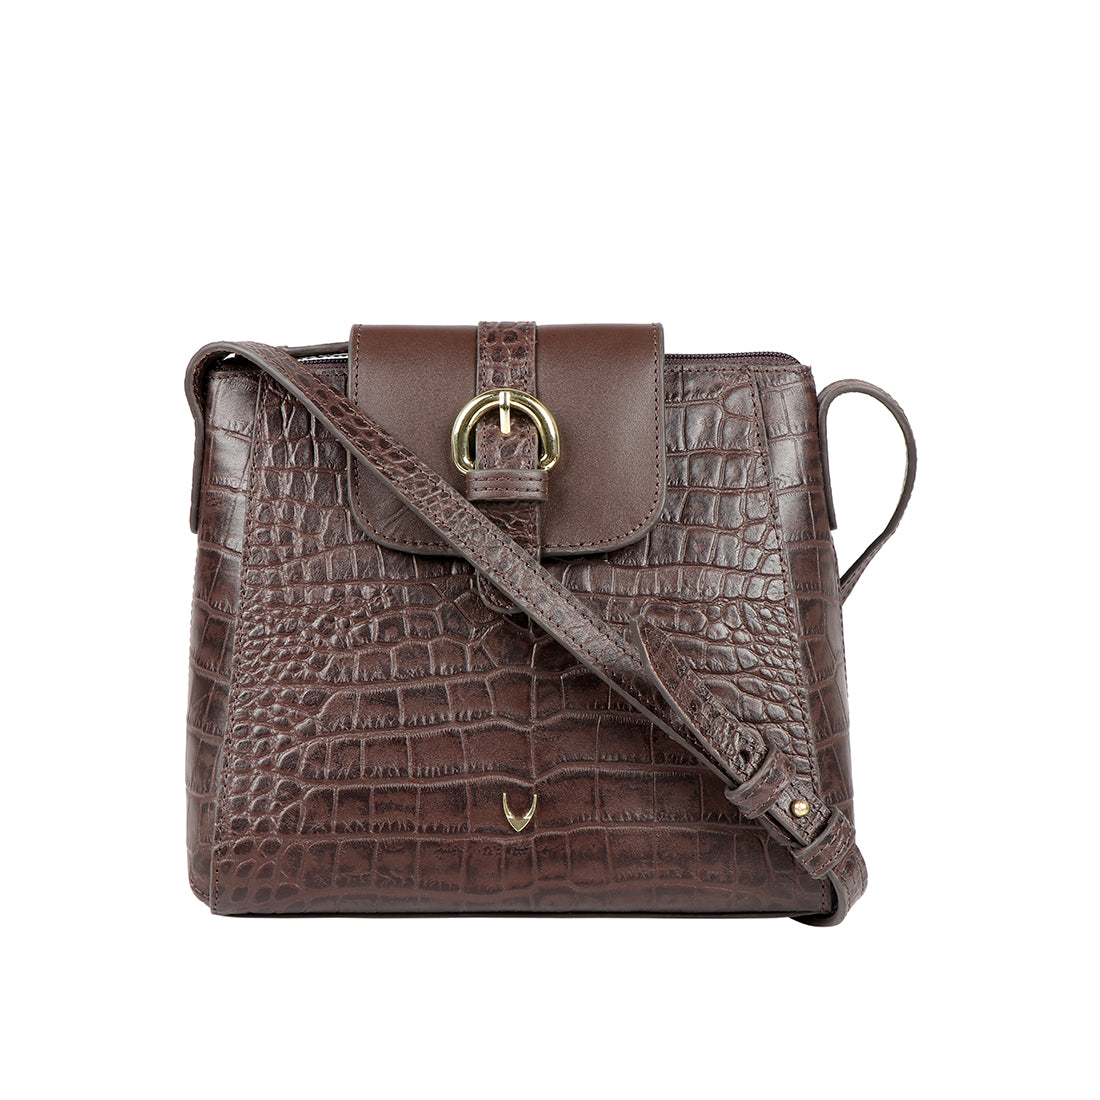 Hidesign Sling and Cross bags : Buy Hidesign Brown Sling Bag